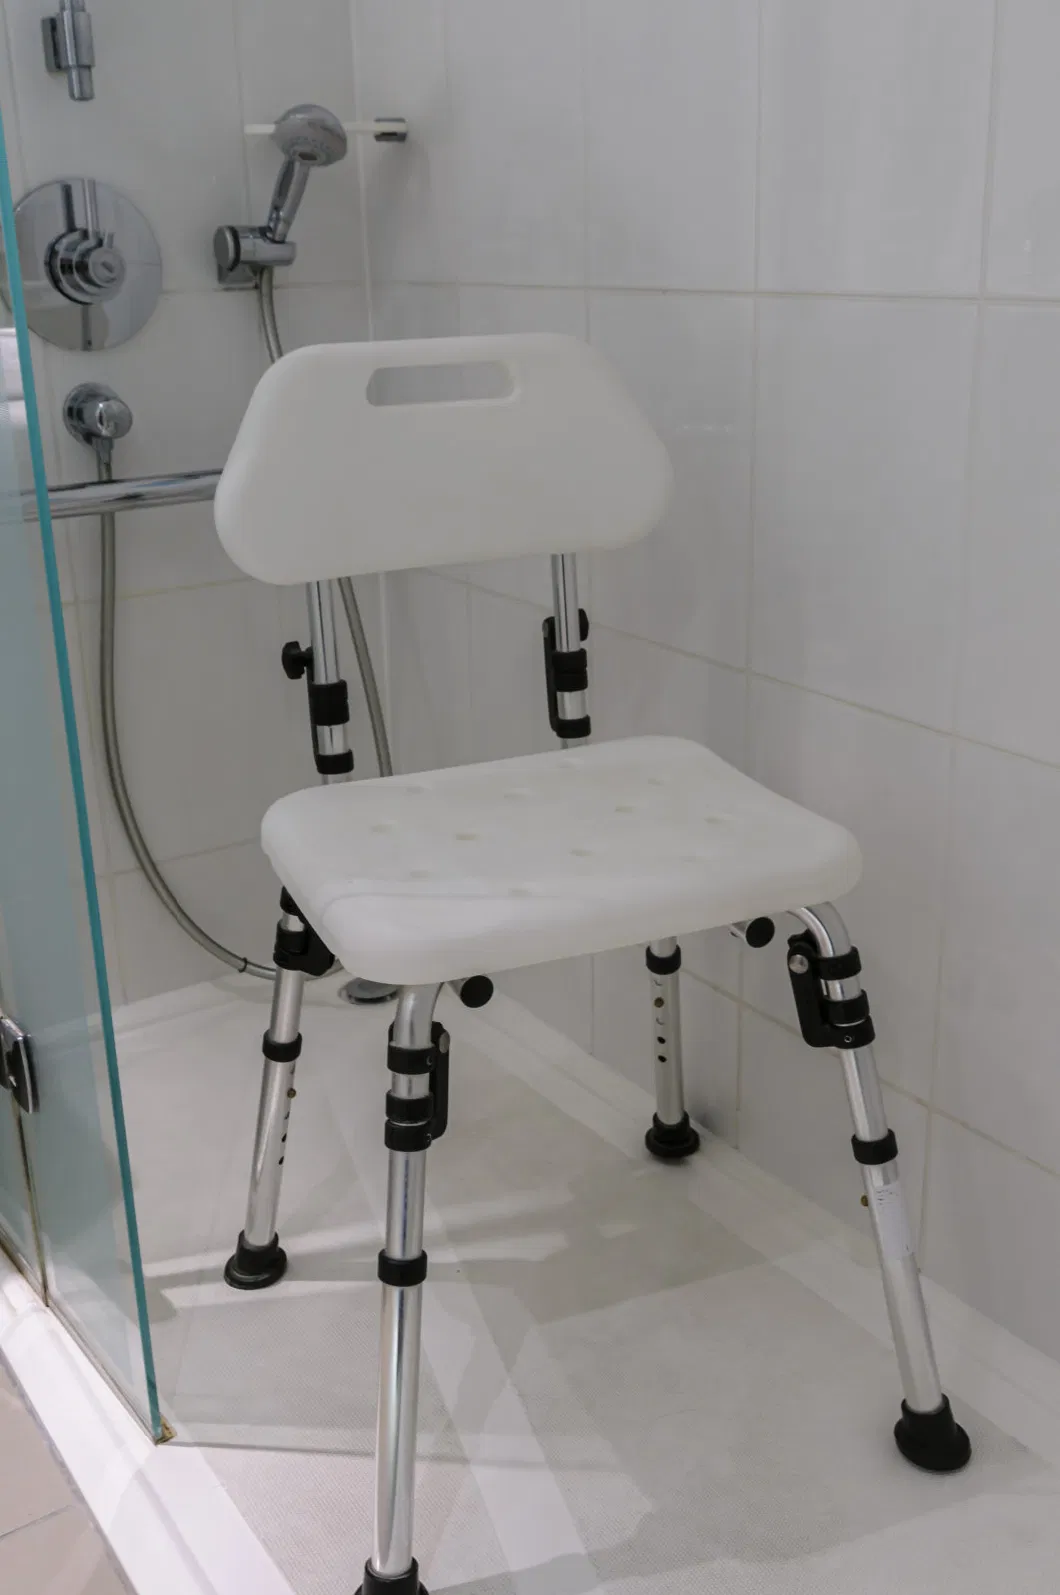 Hot Sale Bathroom Stool Folding Chair Suction Grab Bar Walker Medical Shower Bench